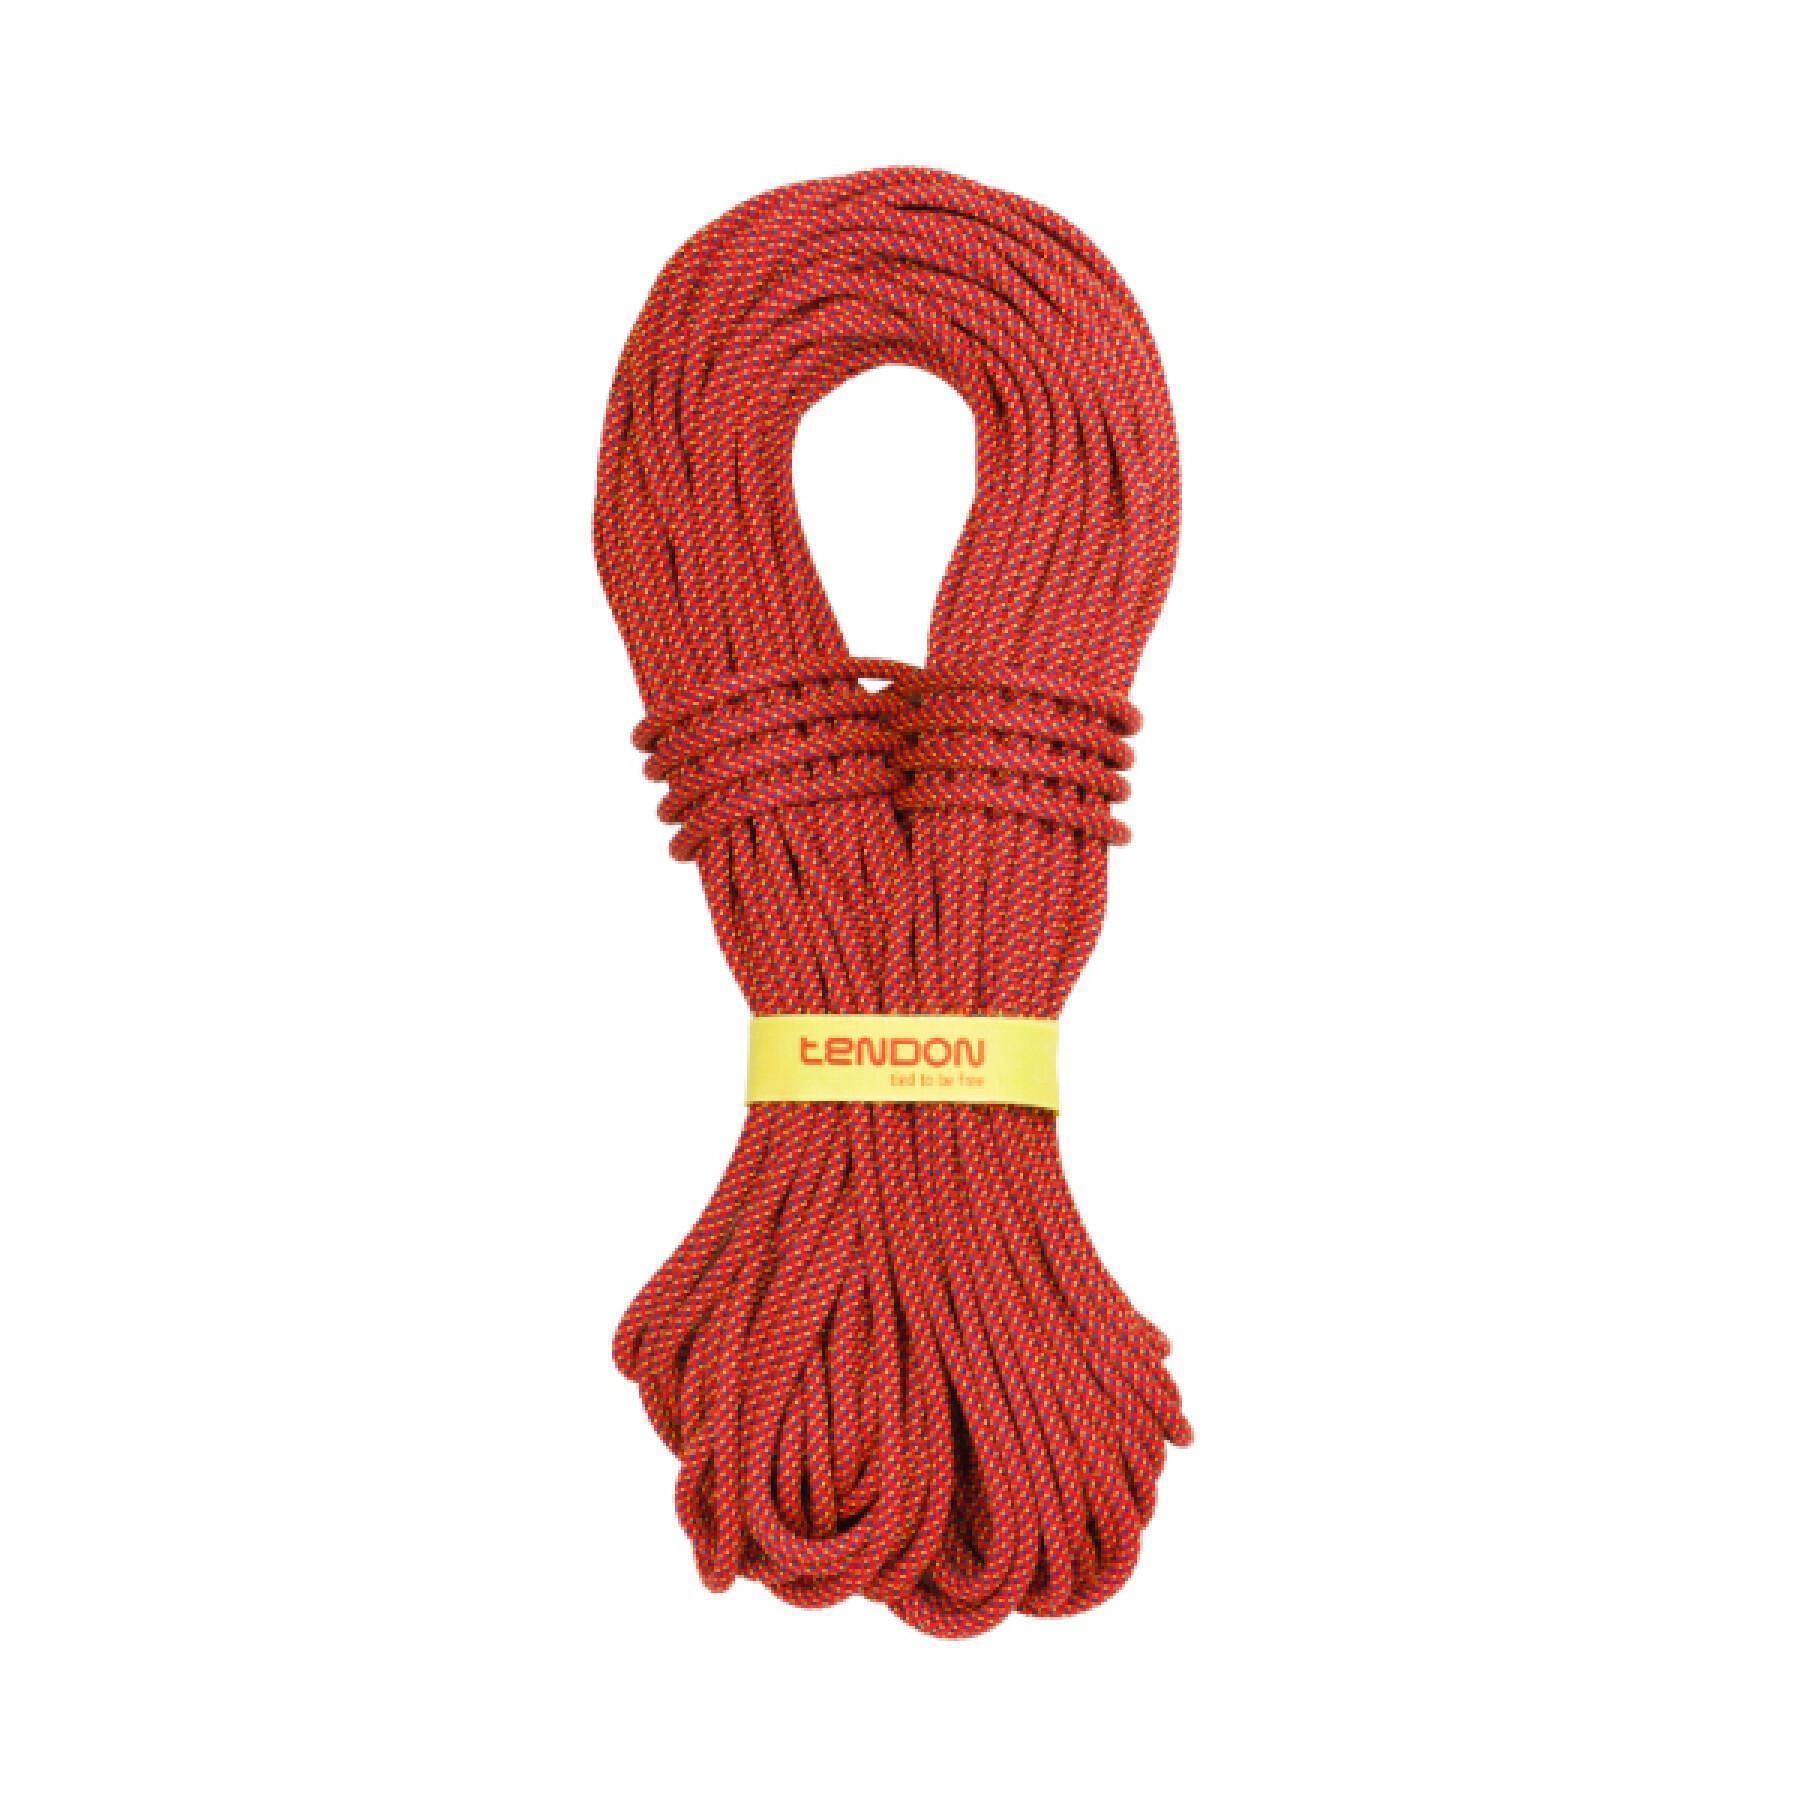 Full shield rope Tendon Alpine 7.9